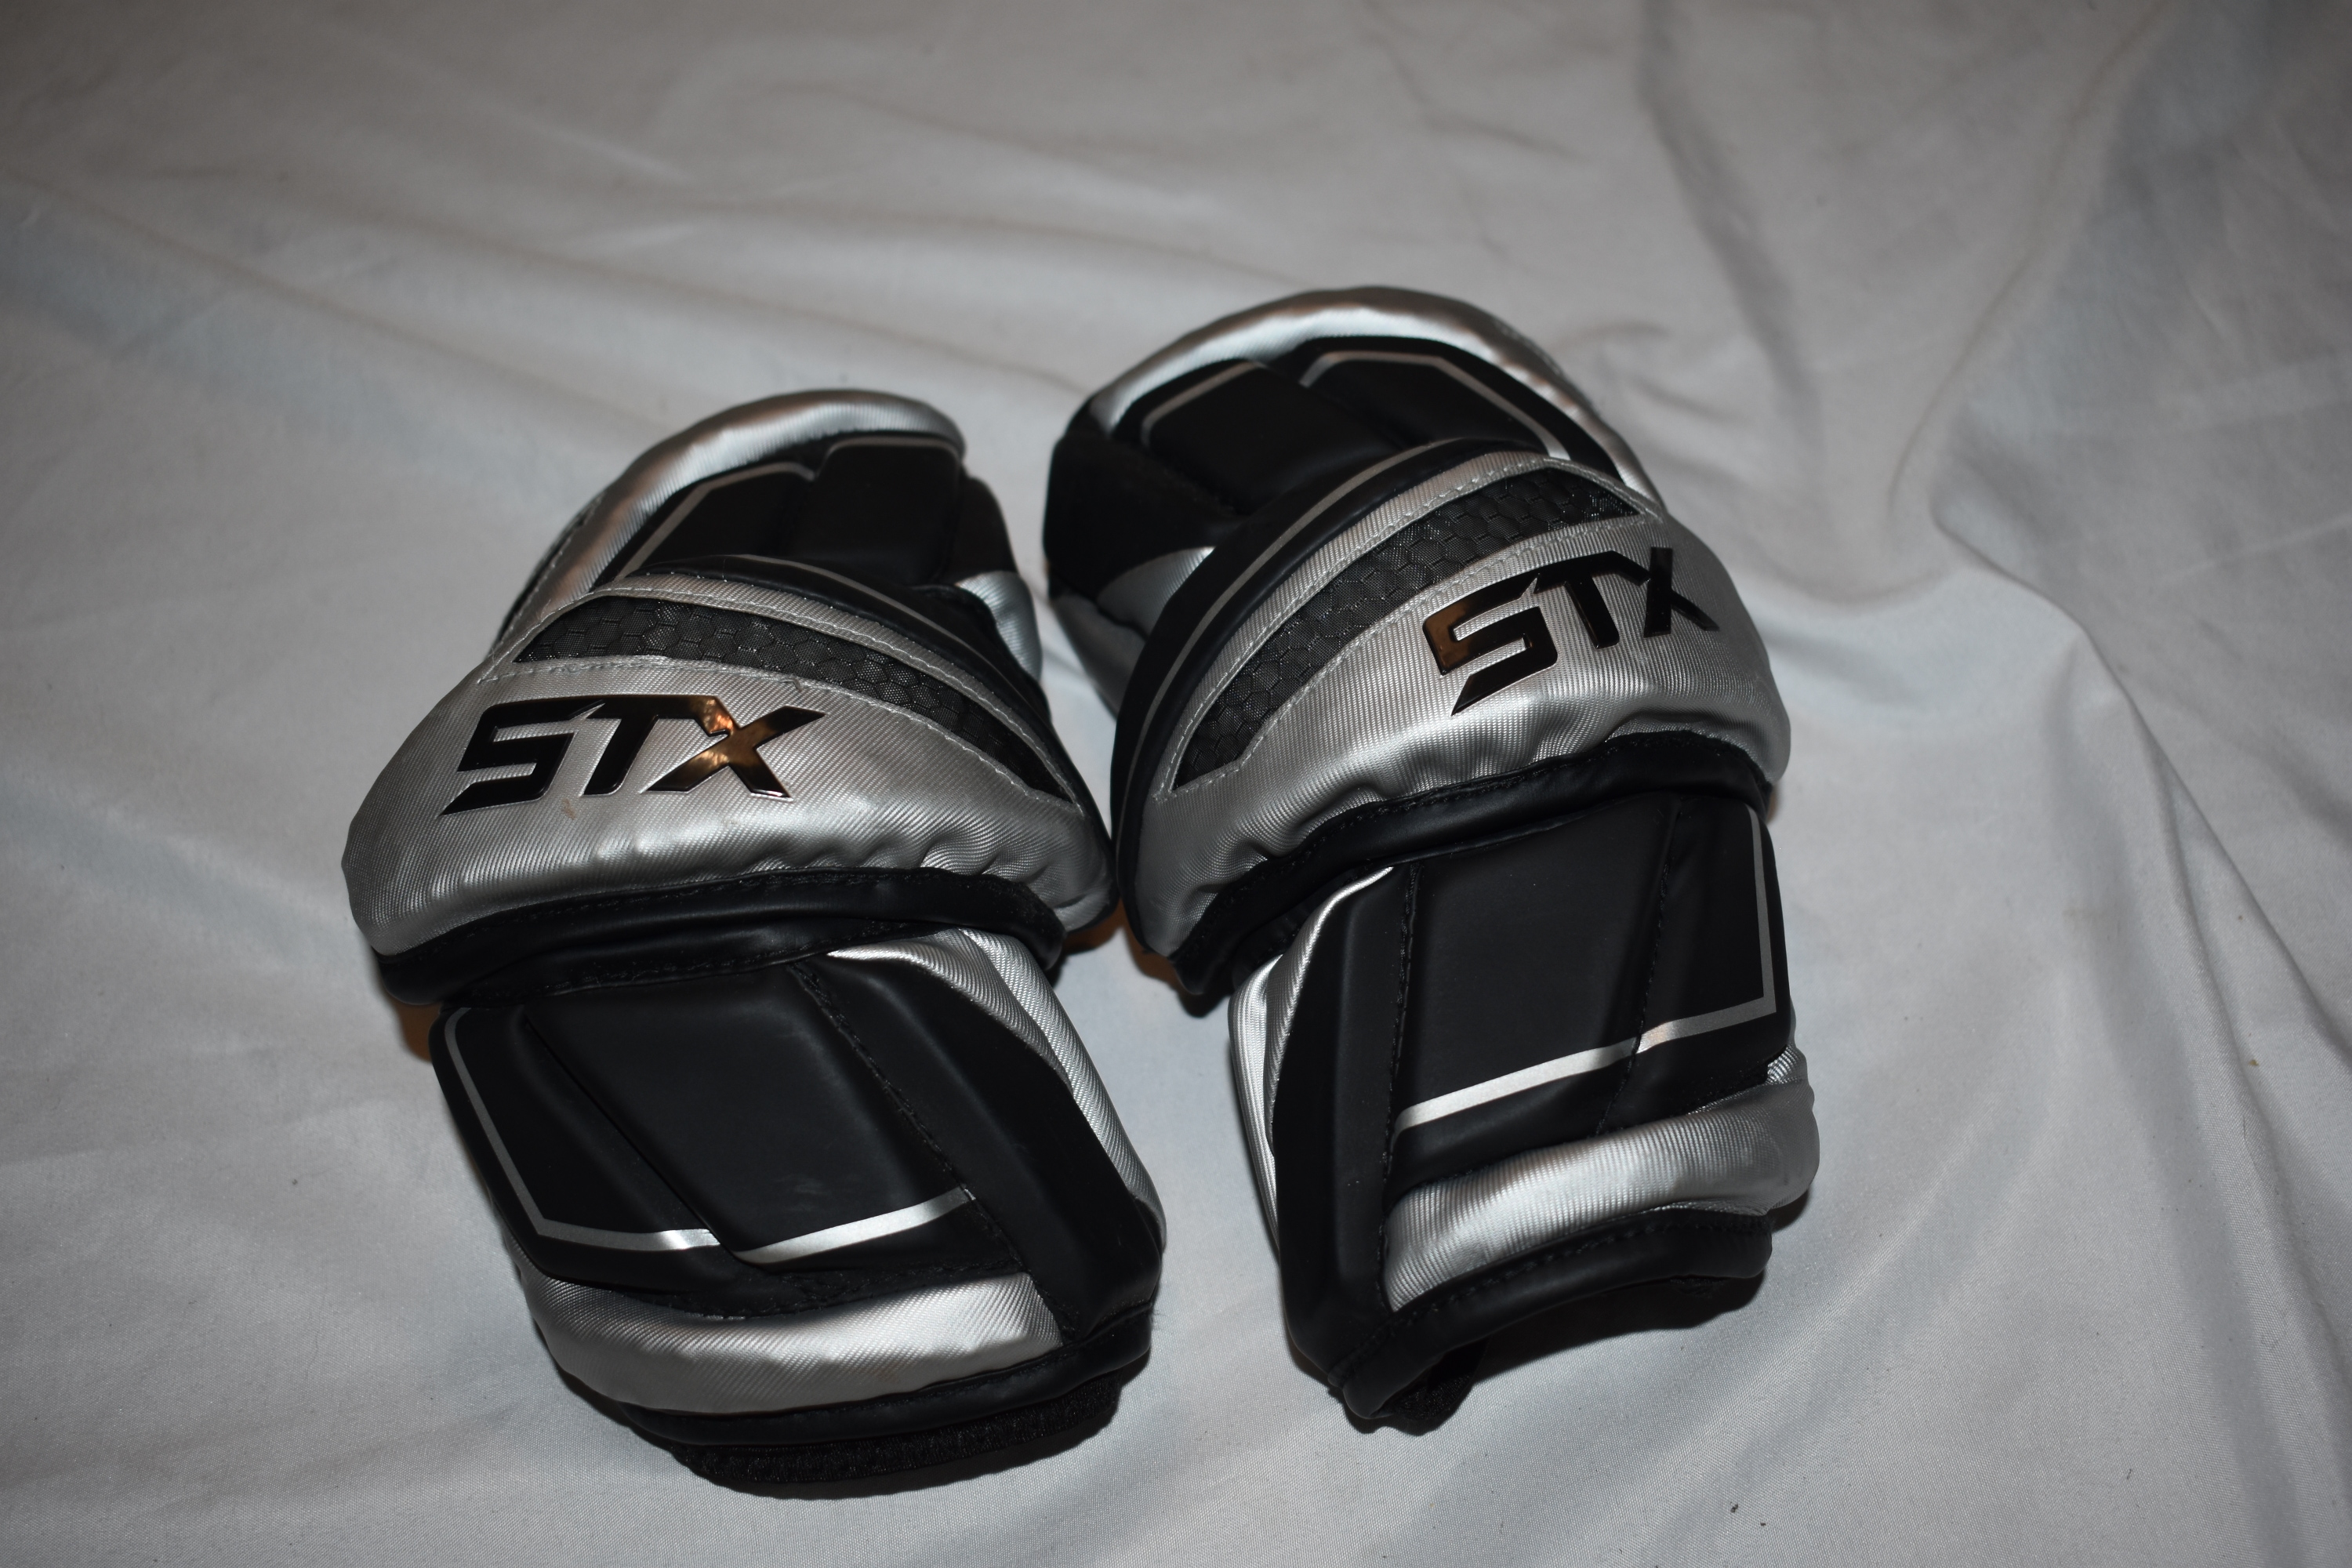 STX Shadow Lacrosse Arm Pads, Black/Silver, Medium - Good Condition!